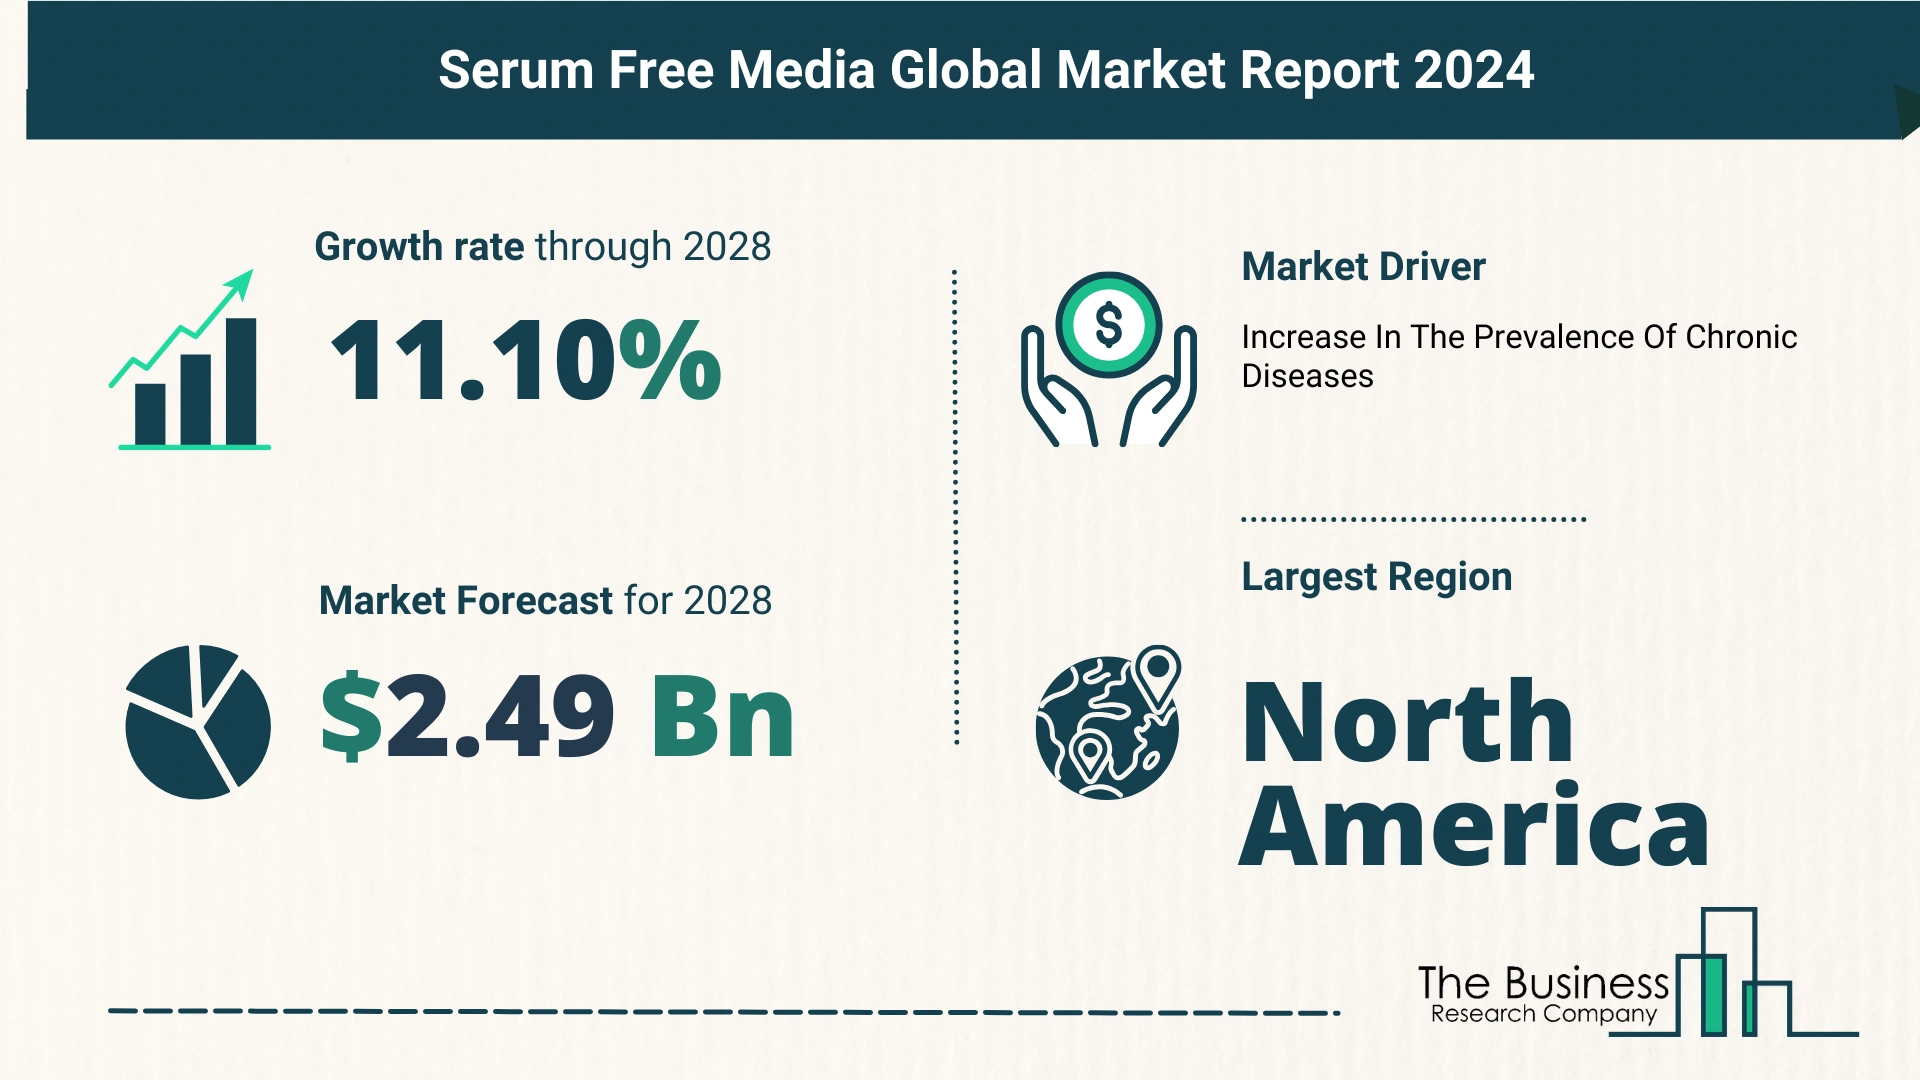 Global Serum Free Media Market